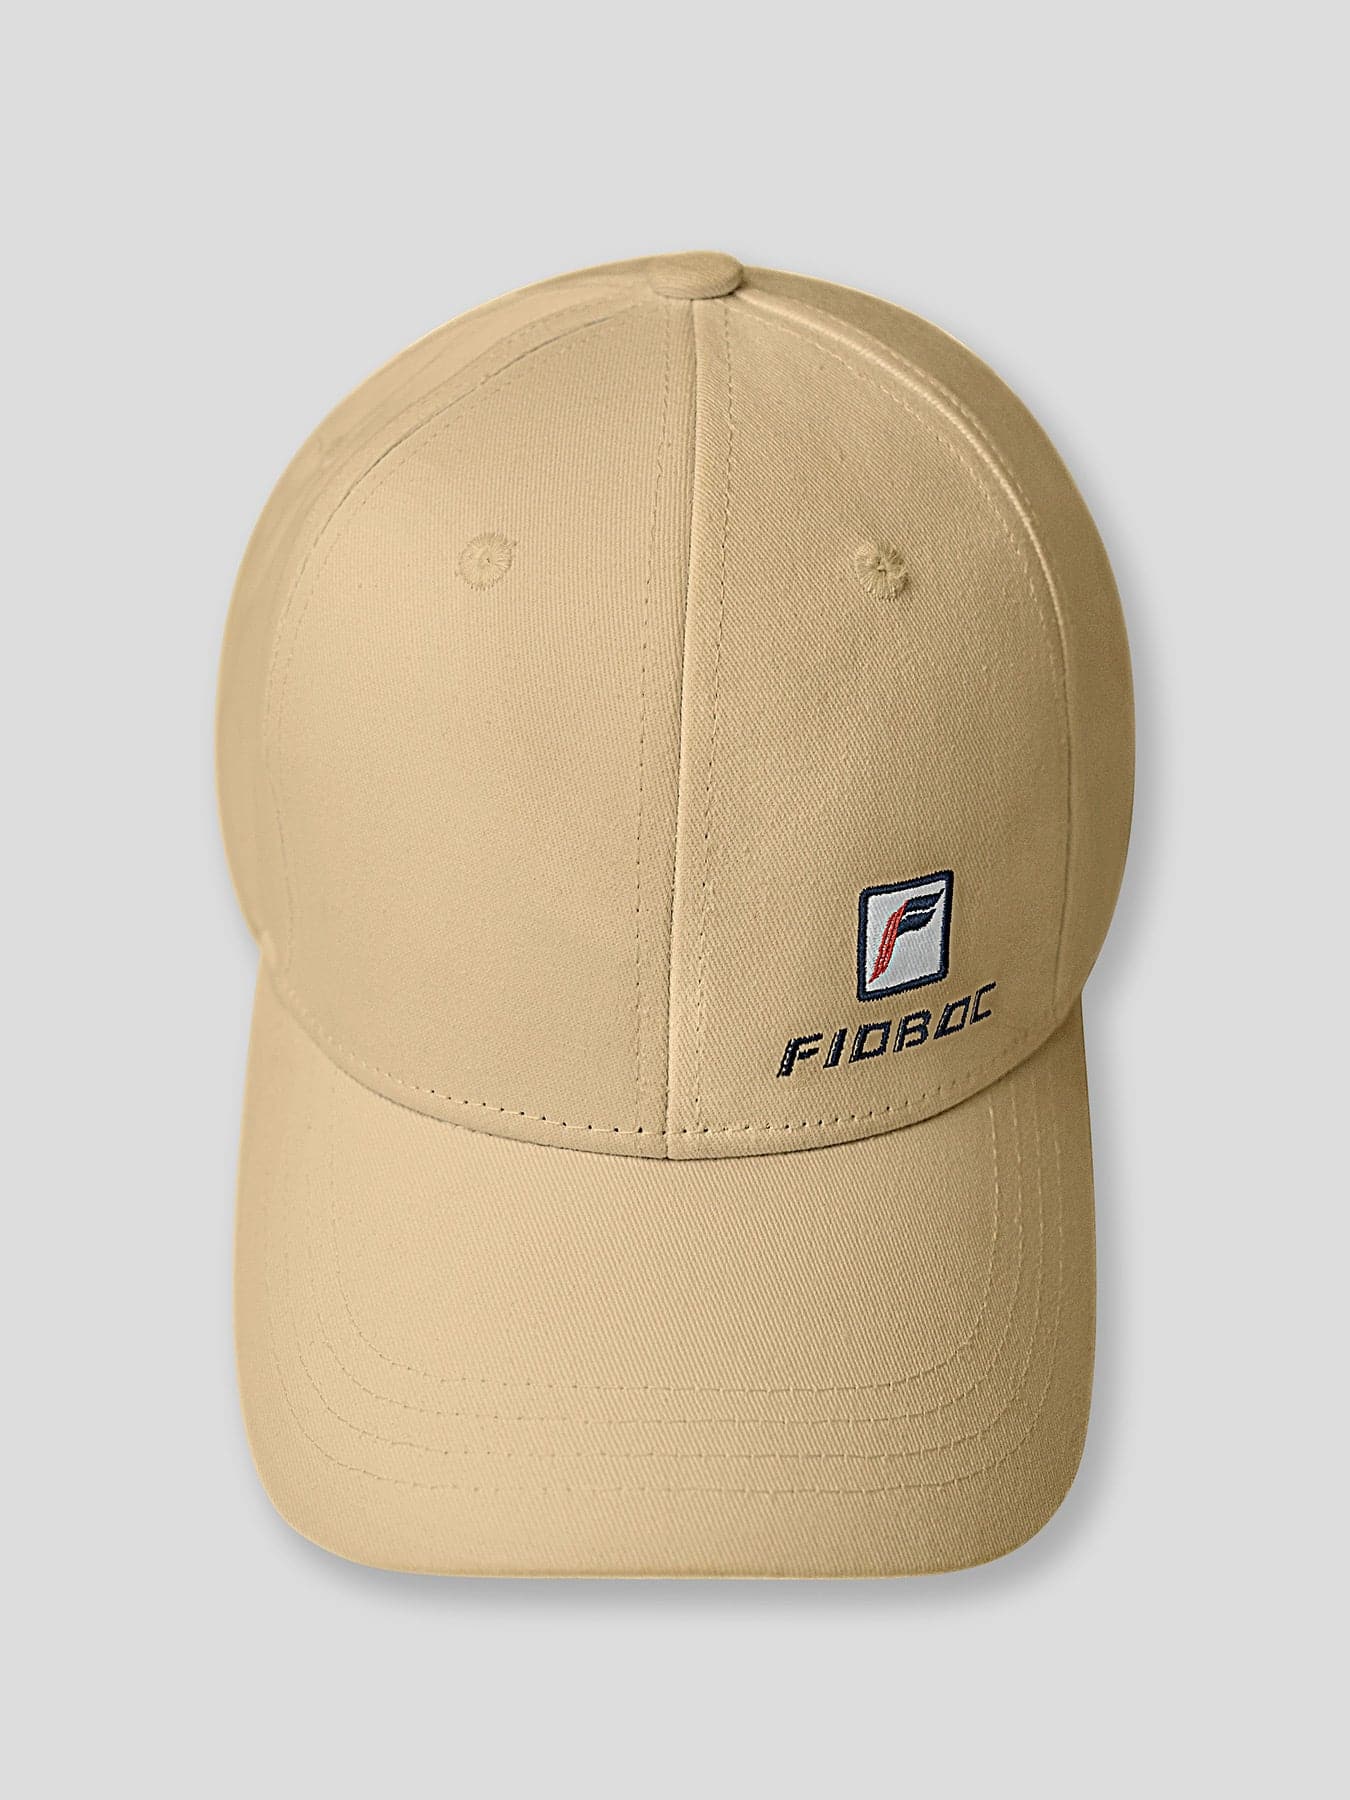 Fioboc Baseballkappe mit aufgesticktem Logo 